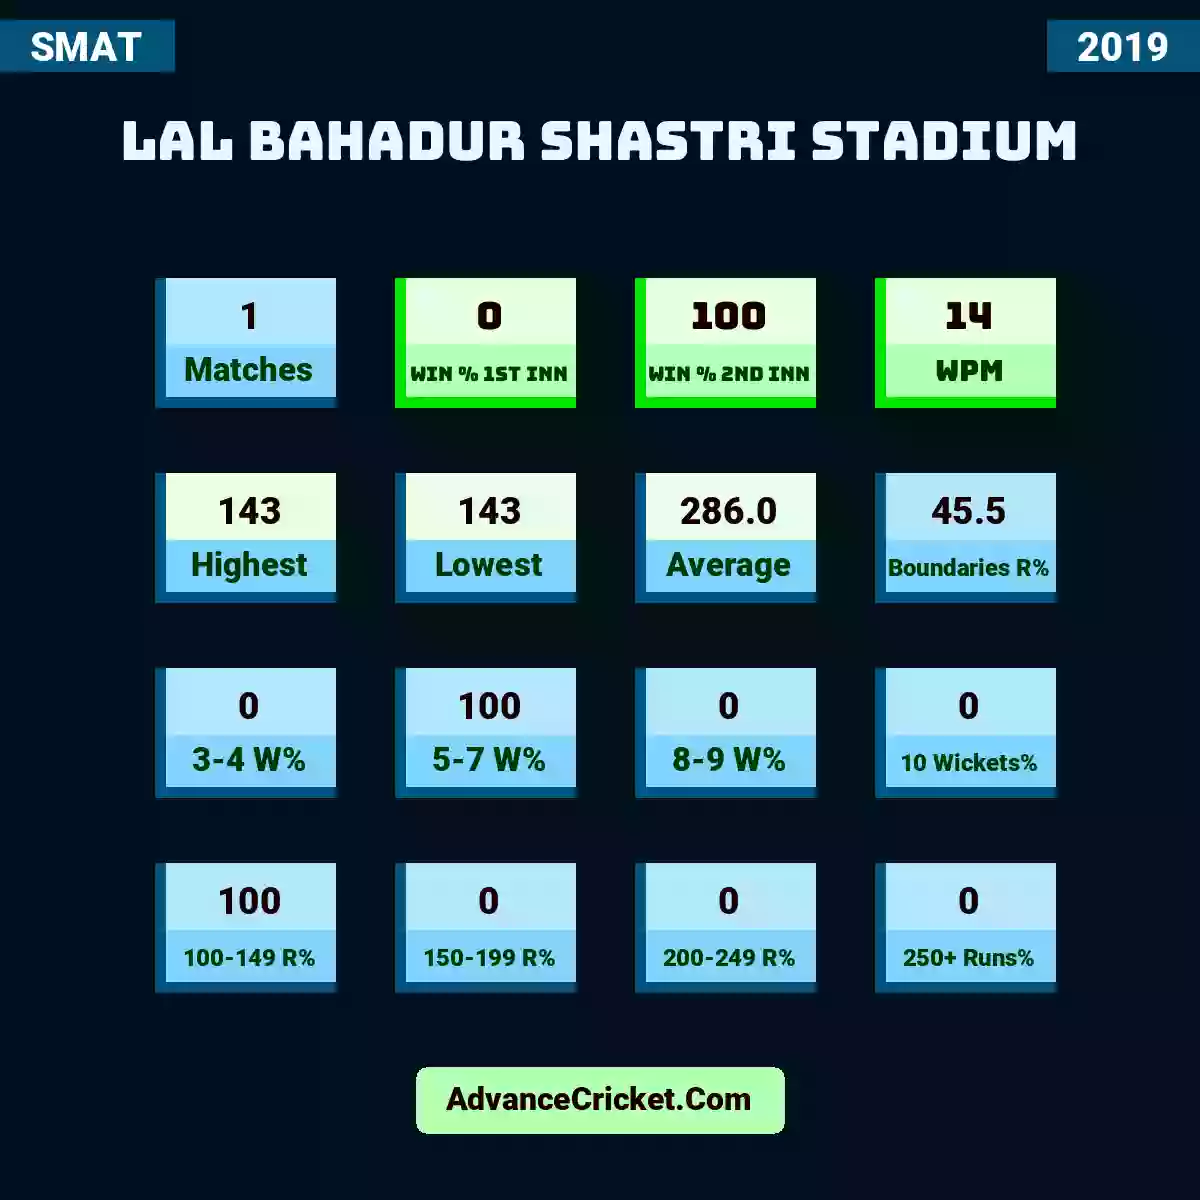 Image showing Lal Bahadur Shastri Stadium with Matches: 1, Win % 1st Inn: 0, Win % 2nd Inn: 100, WPM: 14, Highest: 143, Lowest: 143, Average: 286.0, Boundaries R%: 45.5, 3-4 W%: 0, 5-7 W%: 100, 8-9 W%: 0, 10 Wickets%: 0, 100-149 R%: 100, 150-199 R%: 0, 200-249 R%: 0, 250+ Runs%: 0.